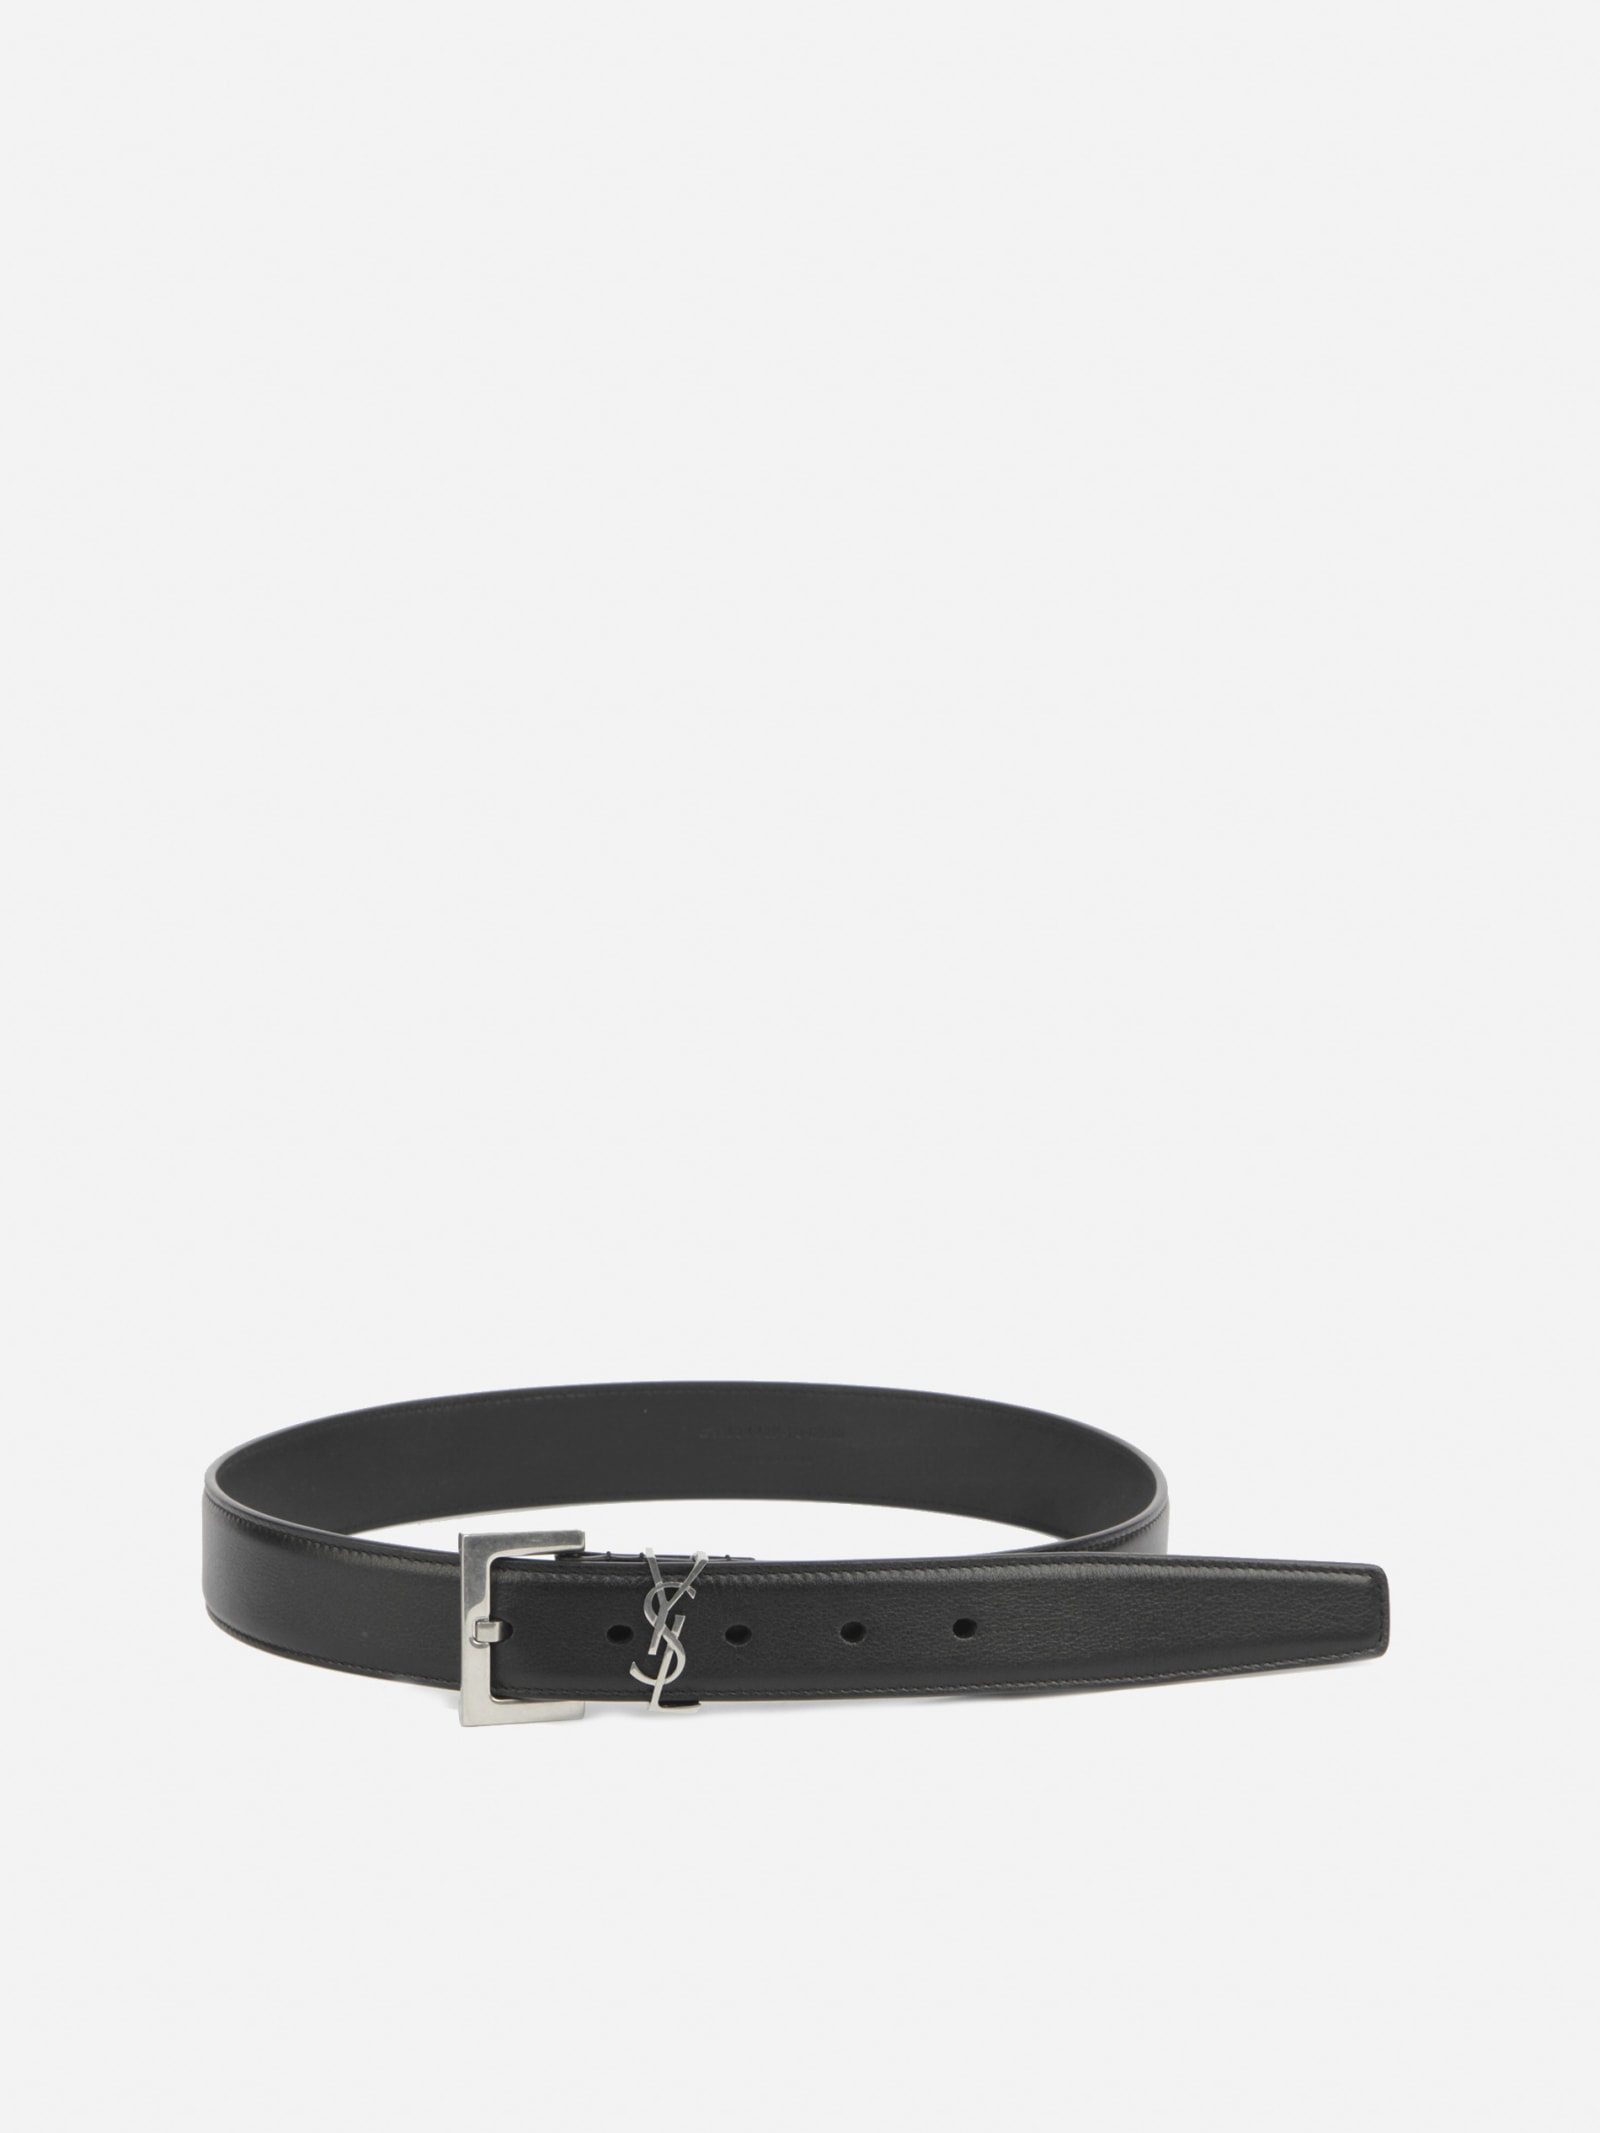 Saint Laurent Monogram Belt In Smooth Leather In Black